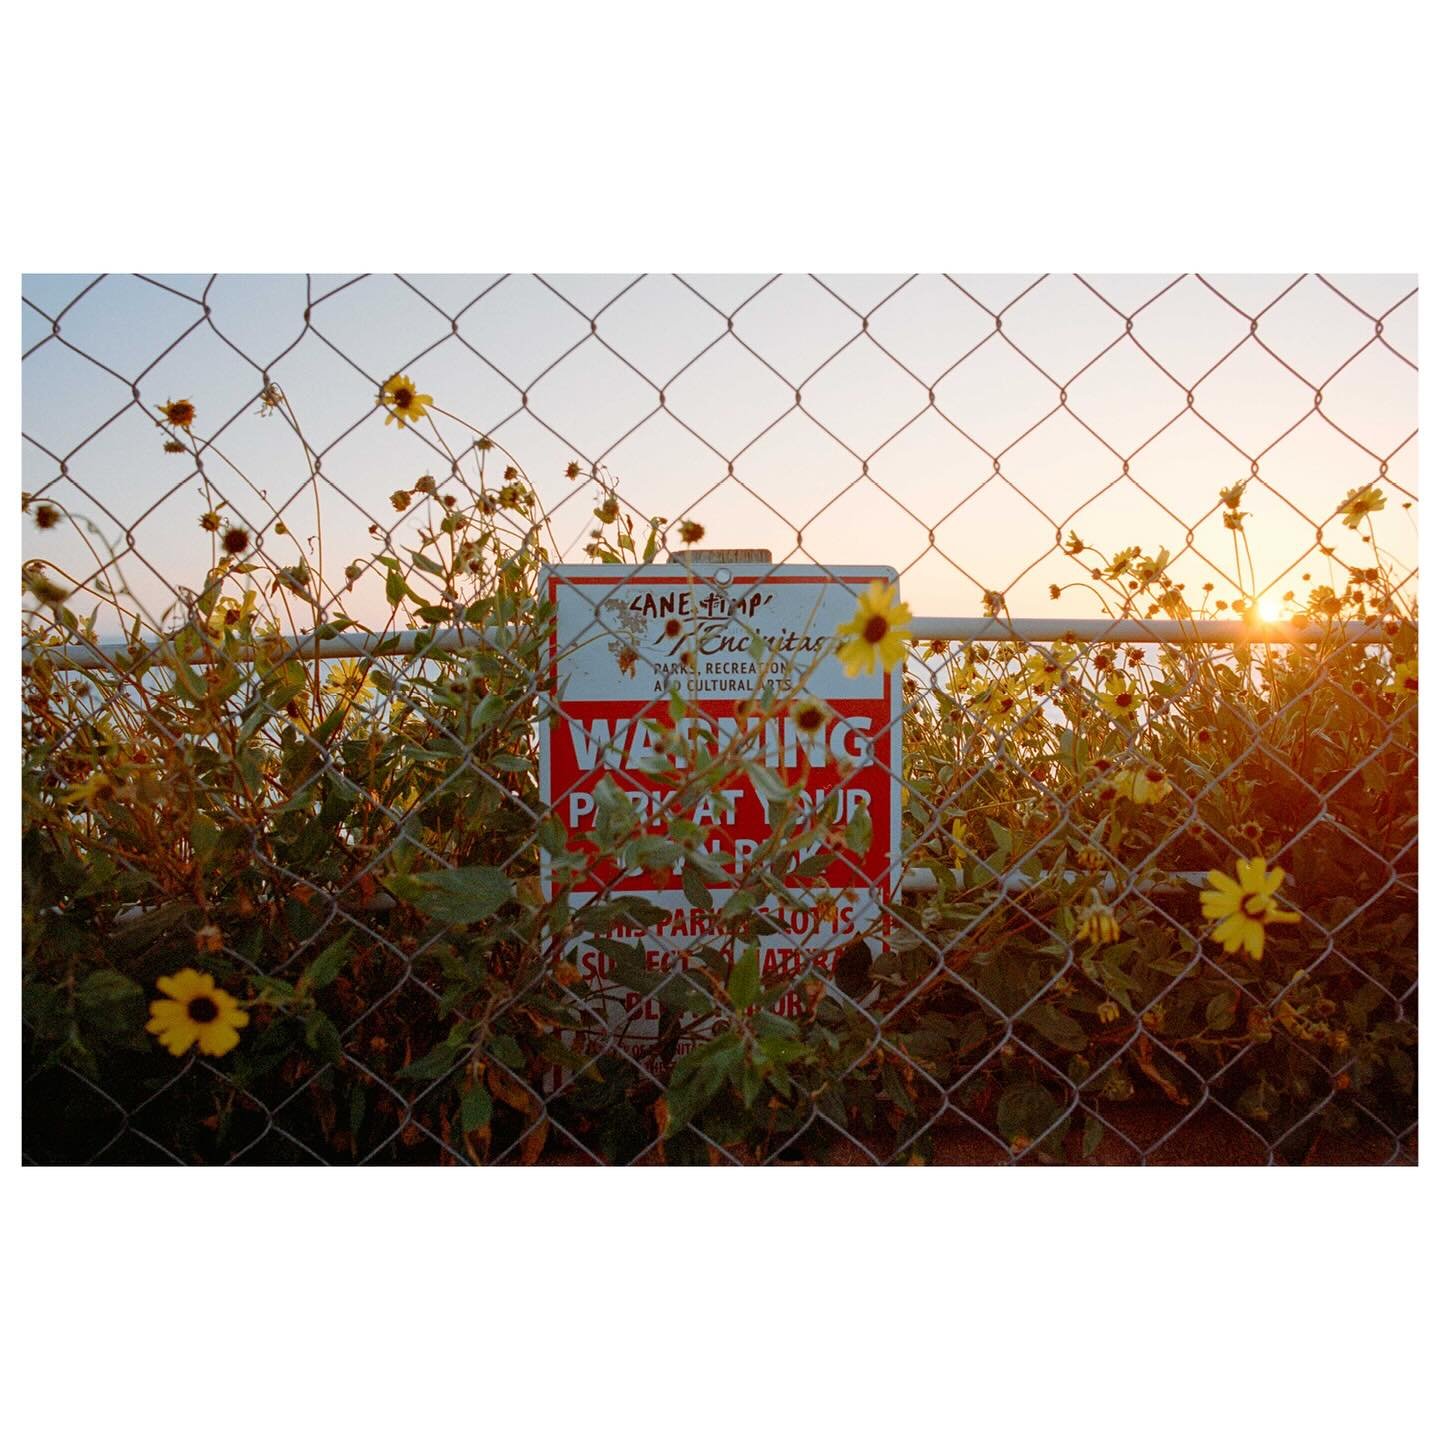 warning signs.

🎞 // Kodak Portra 400
📷 // Leica MP